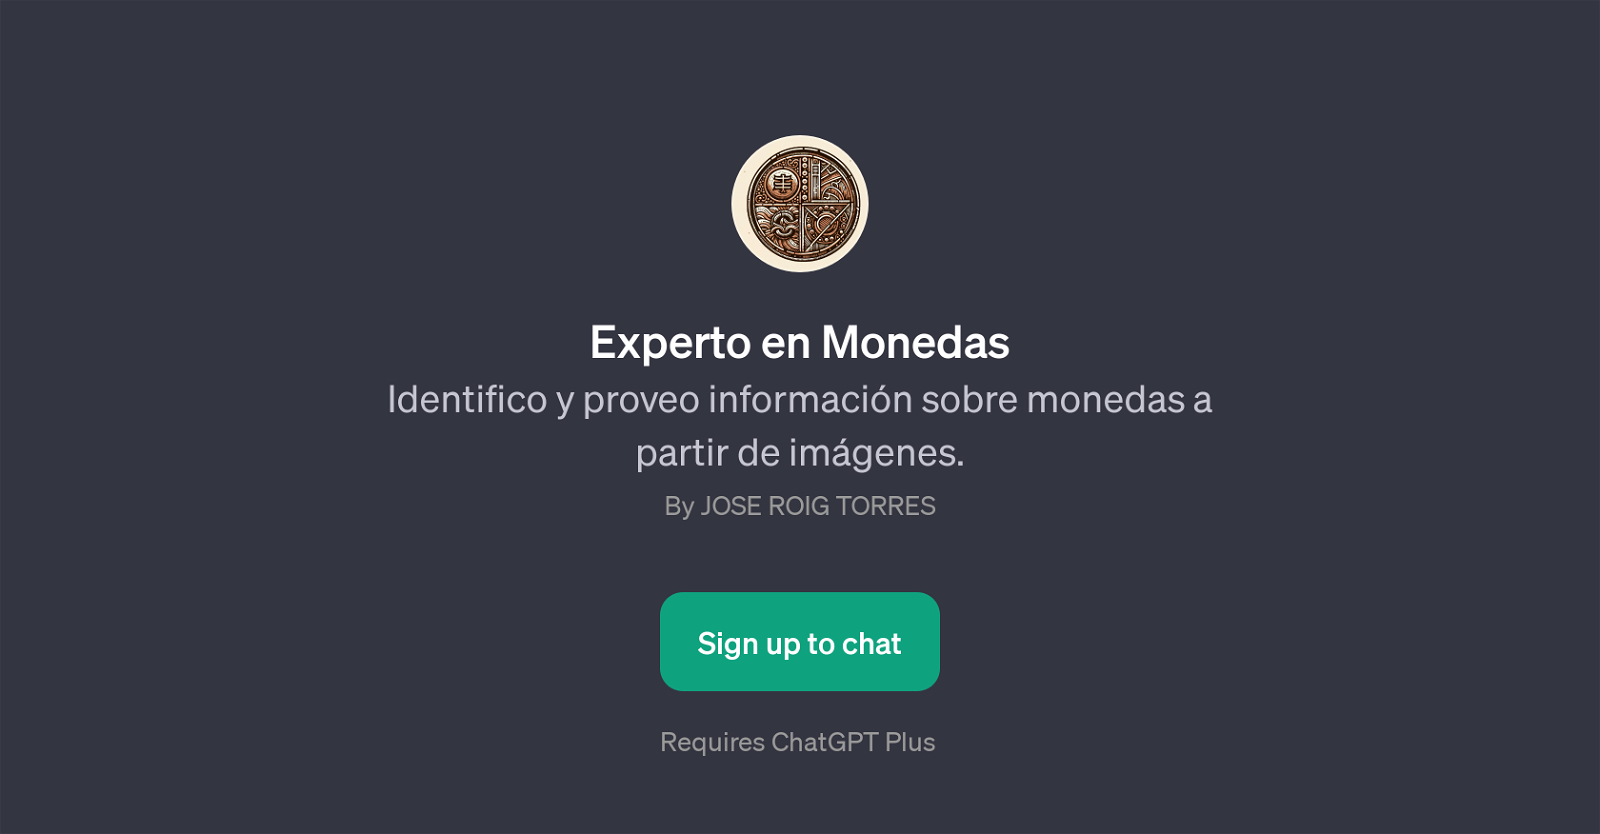 Experto en Monedas website